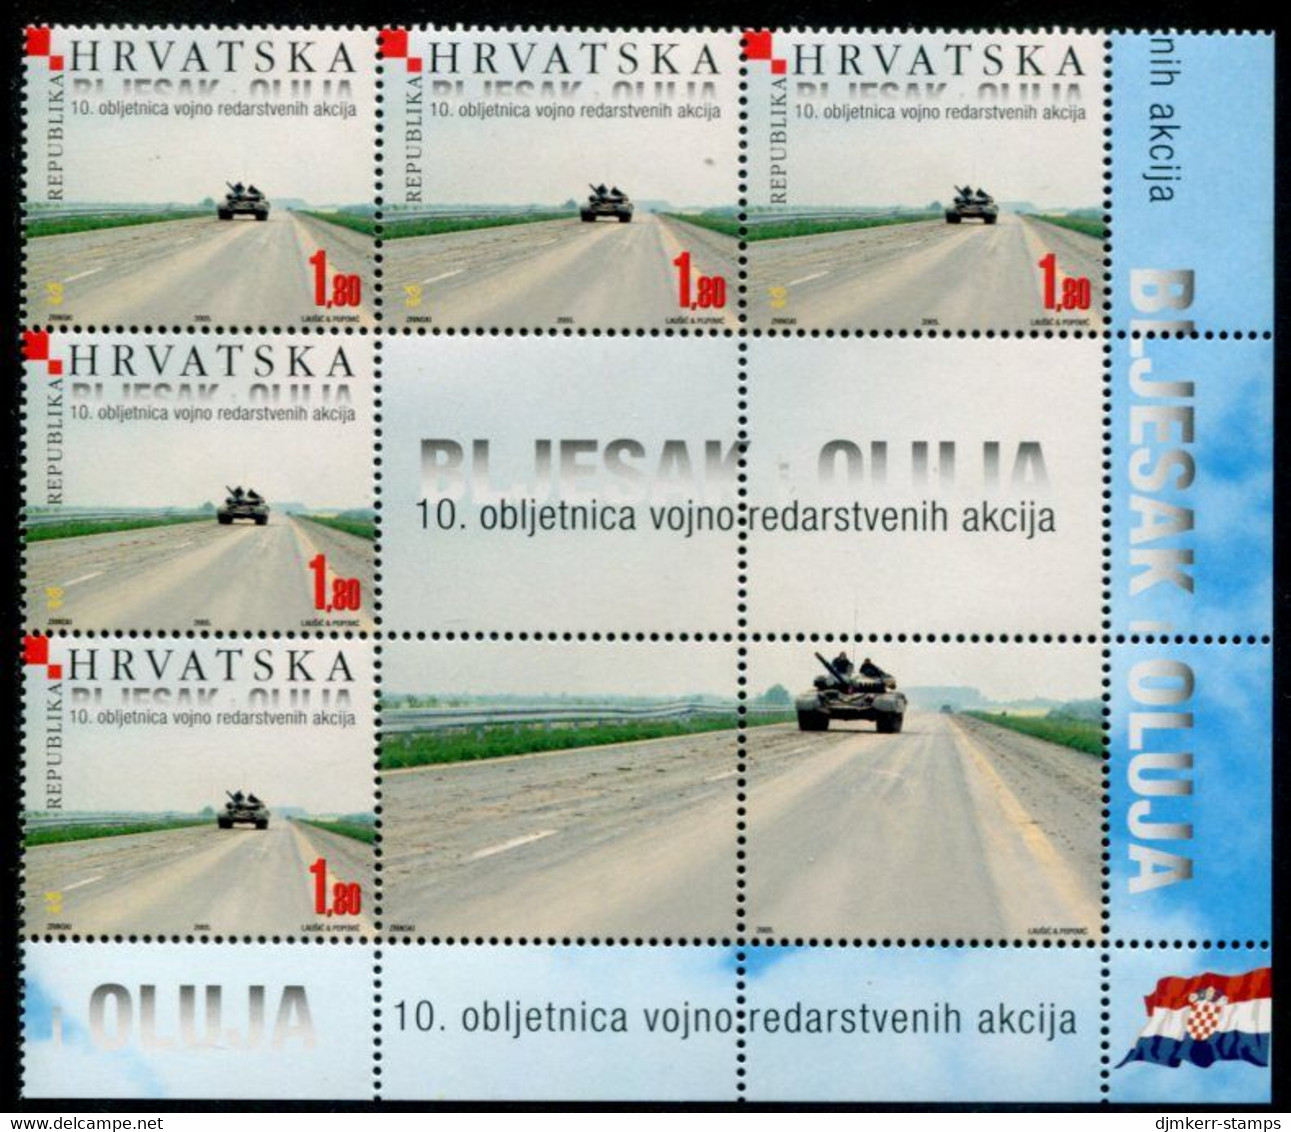 CROATIA 2005 10th Anniversary Of Military Campaigns Block Of 5 + Labels MNH / **.  Michel 716 - Kroatien